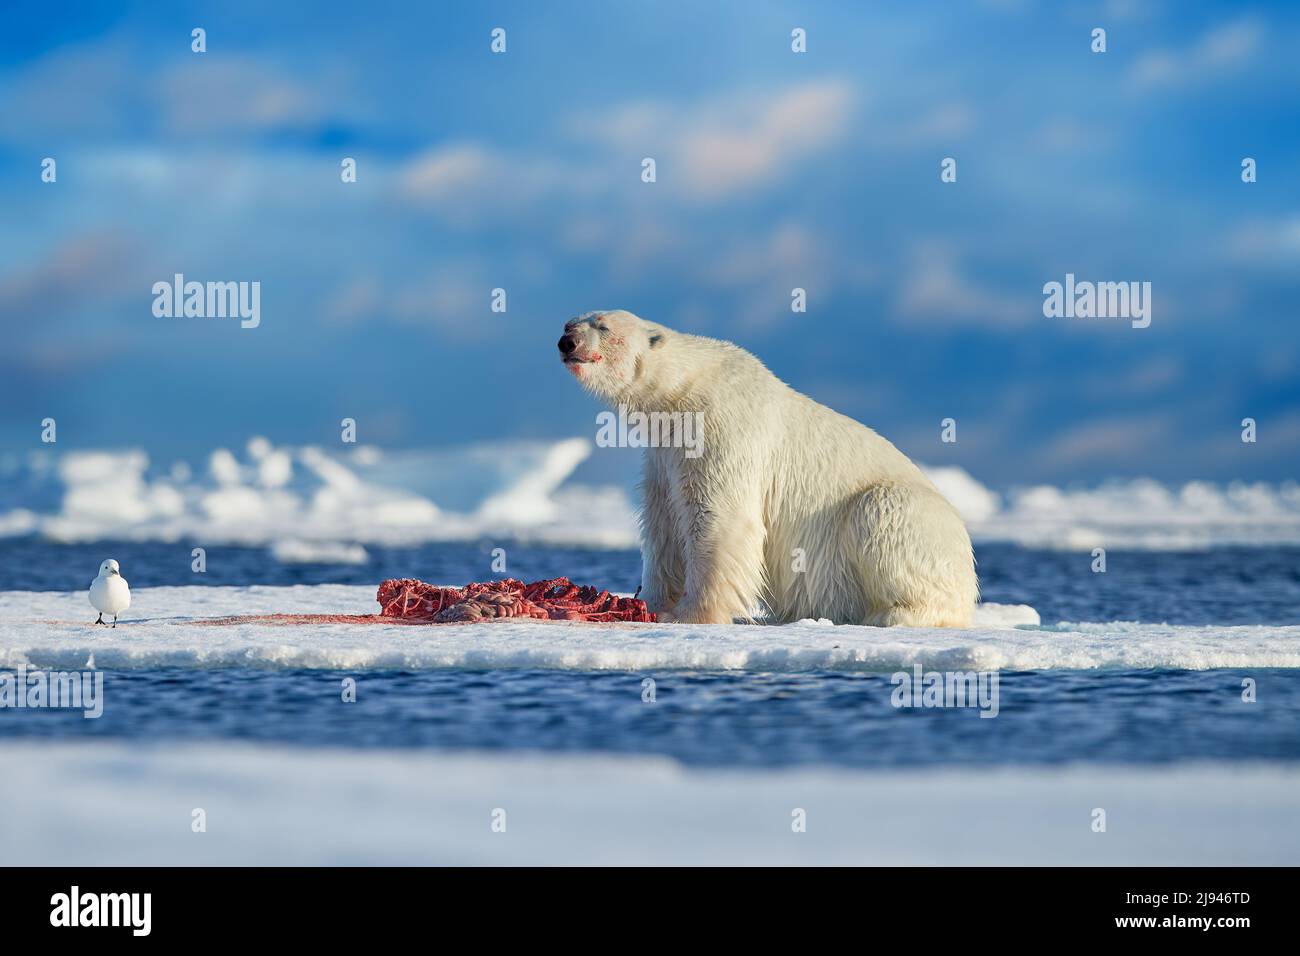 Polar bear on drifting ice with snow feeding on killed seal, skeleton and blood, wildlife Svalbard, Norway. Beras with carcass, wildlife nature. Stock Photo